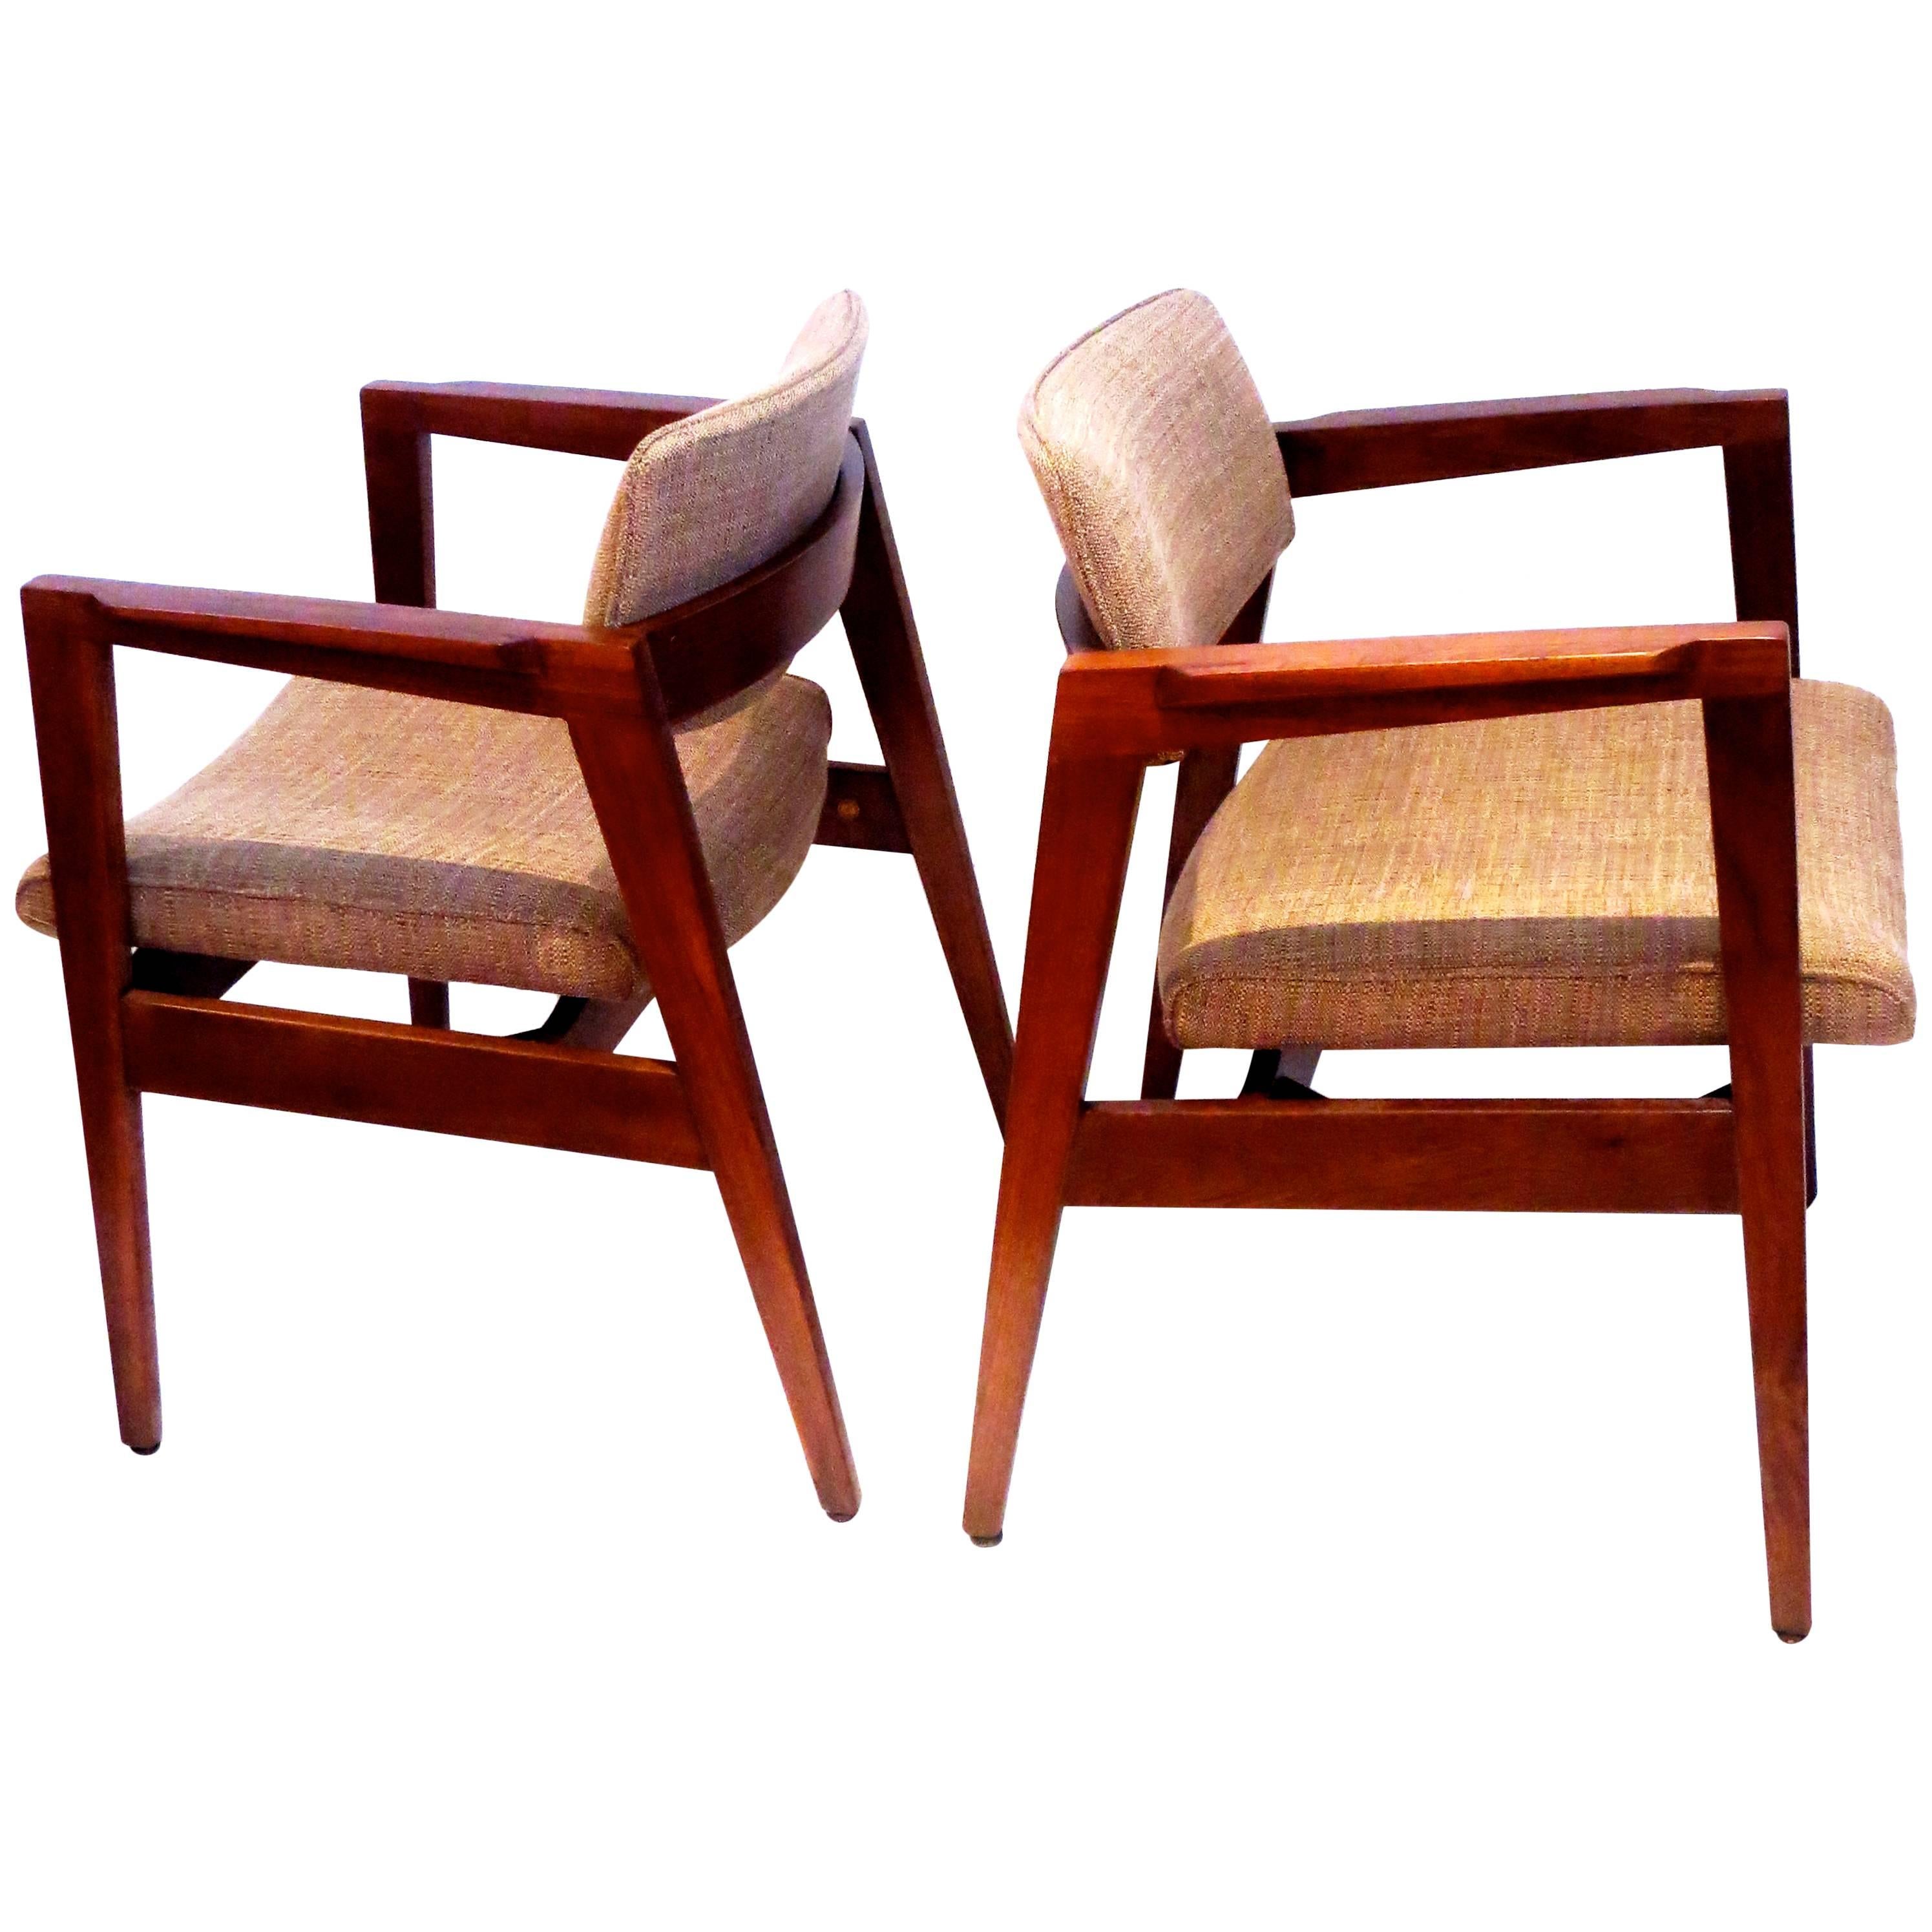 1950s American Modern solid Walnut  Pair of Armchairs by Gunlocke